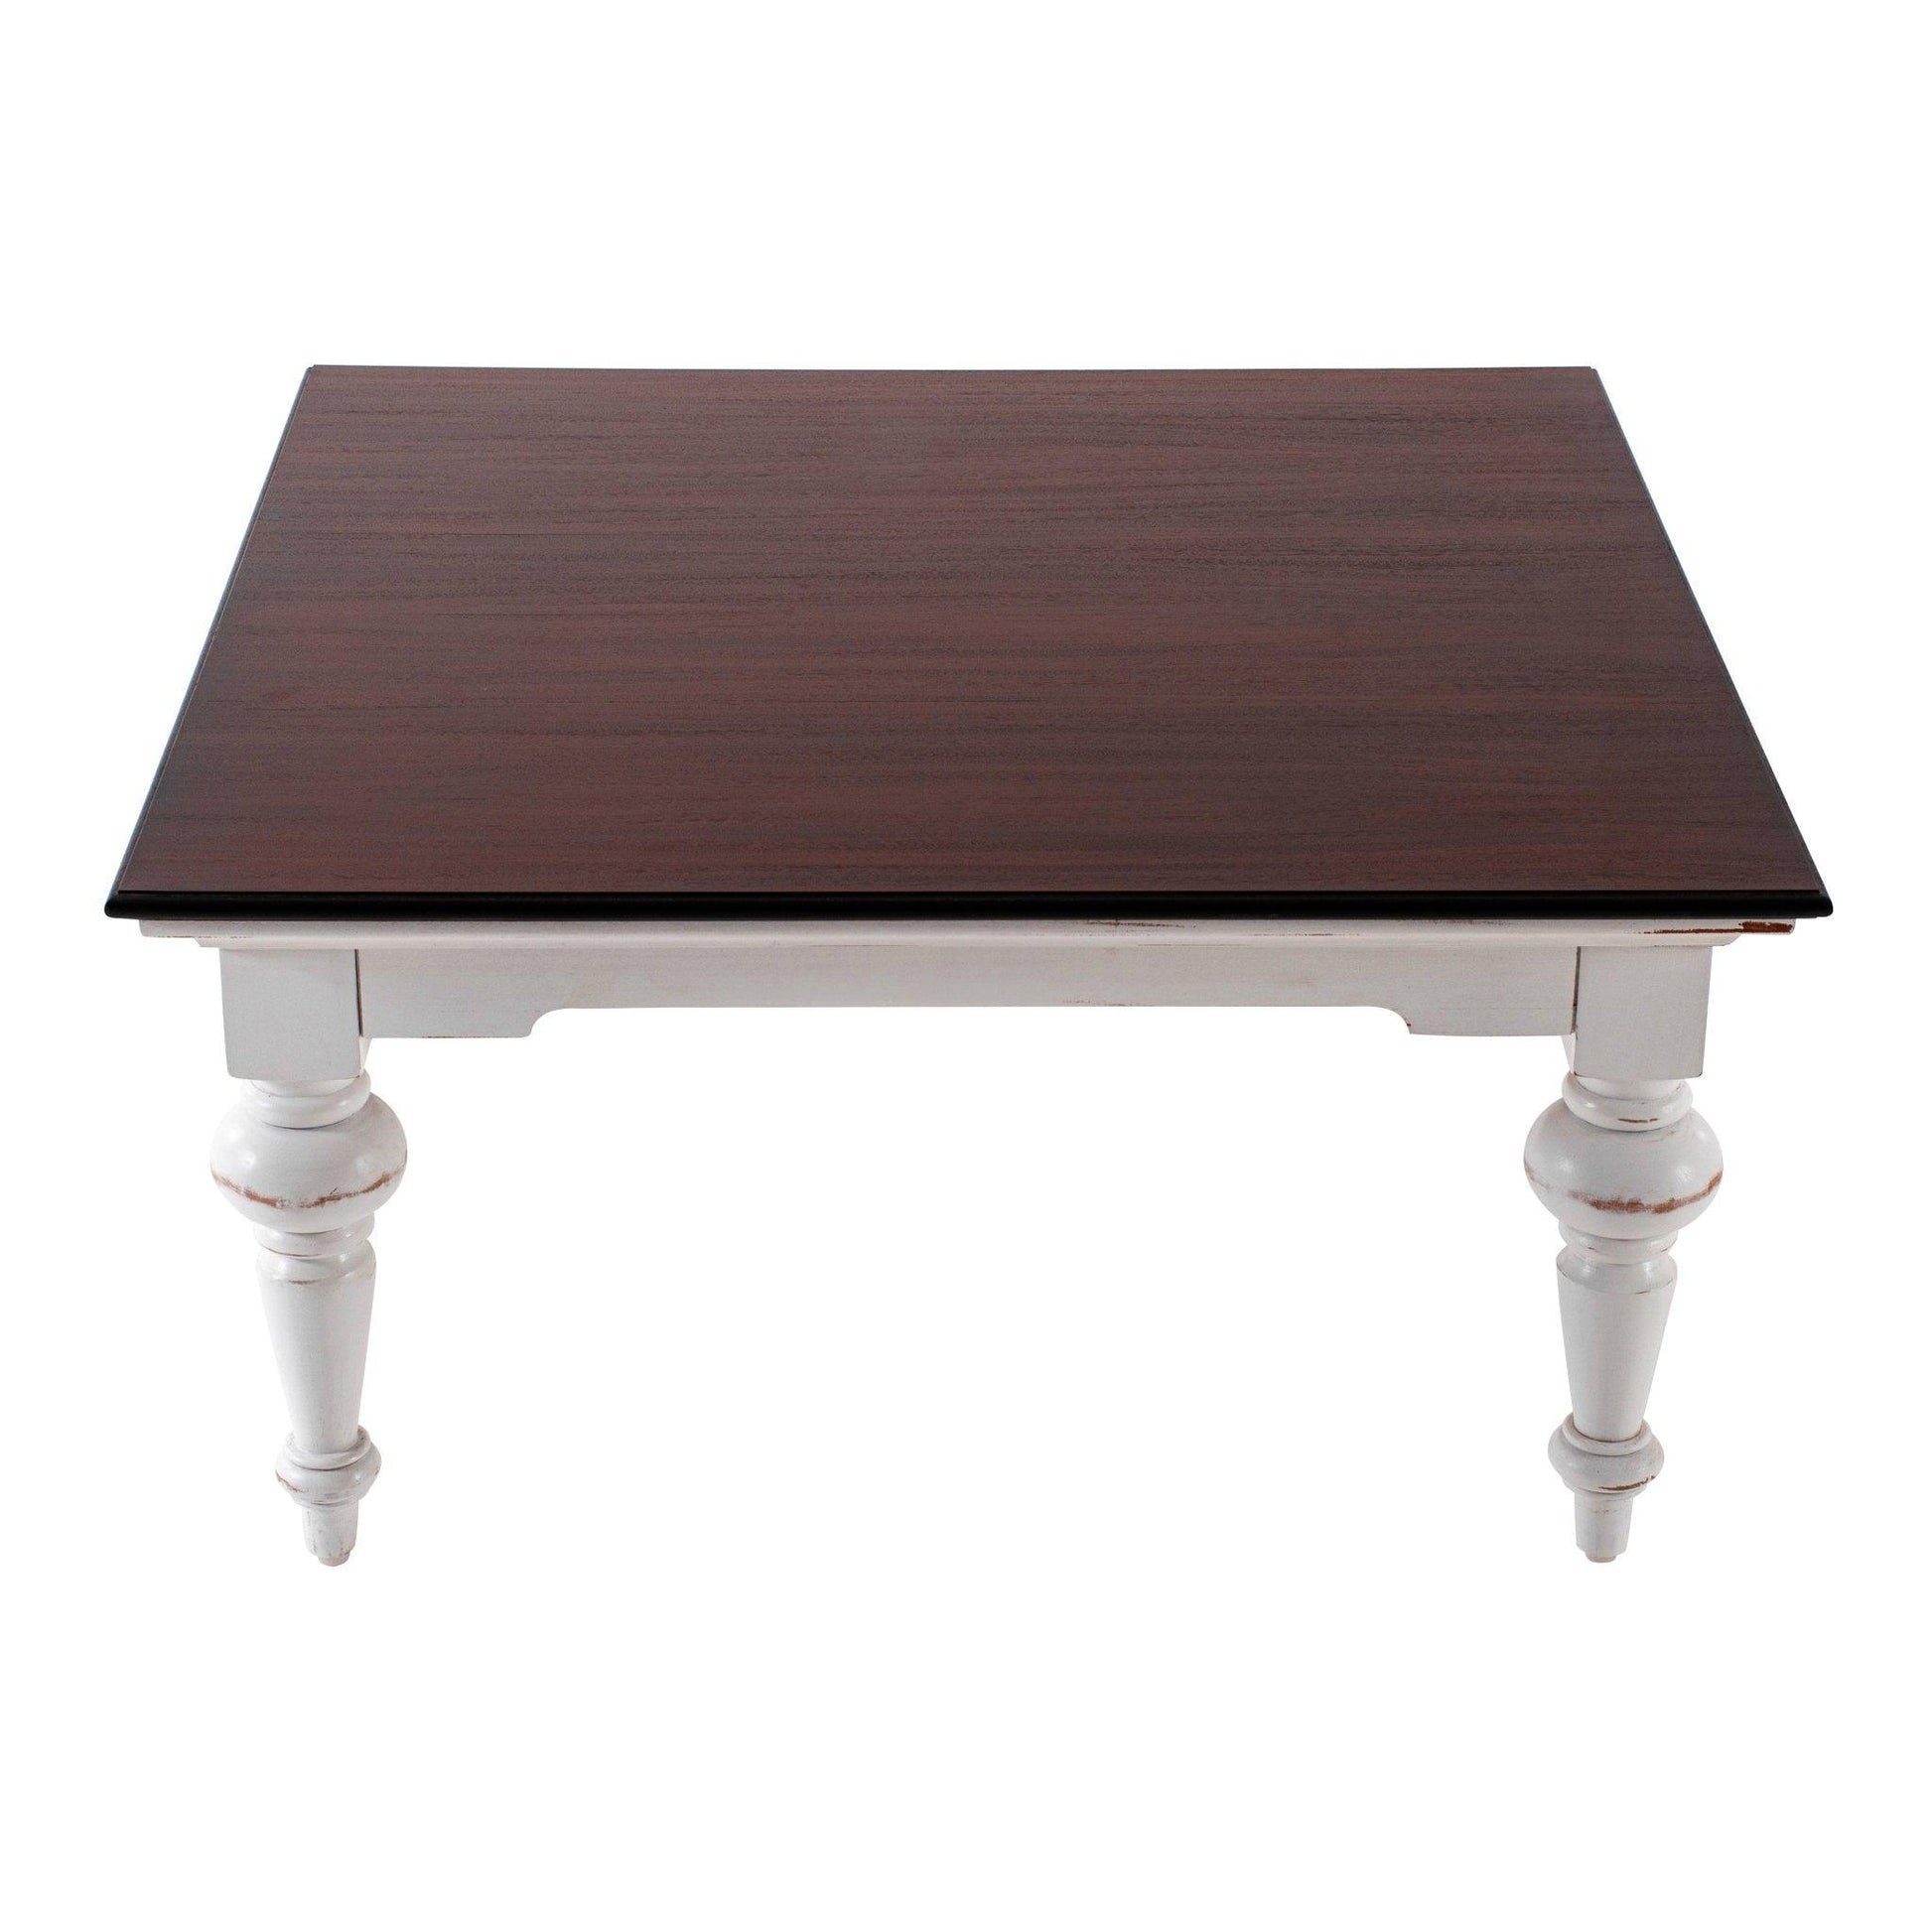 NovaSolo Square Coffee Table T774TWD - Coffee TableT774TWD8994921002101 3